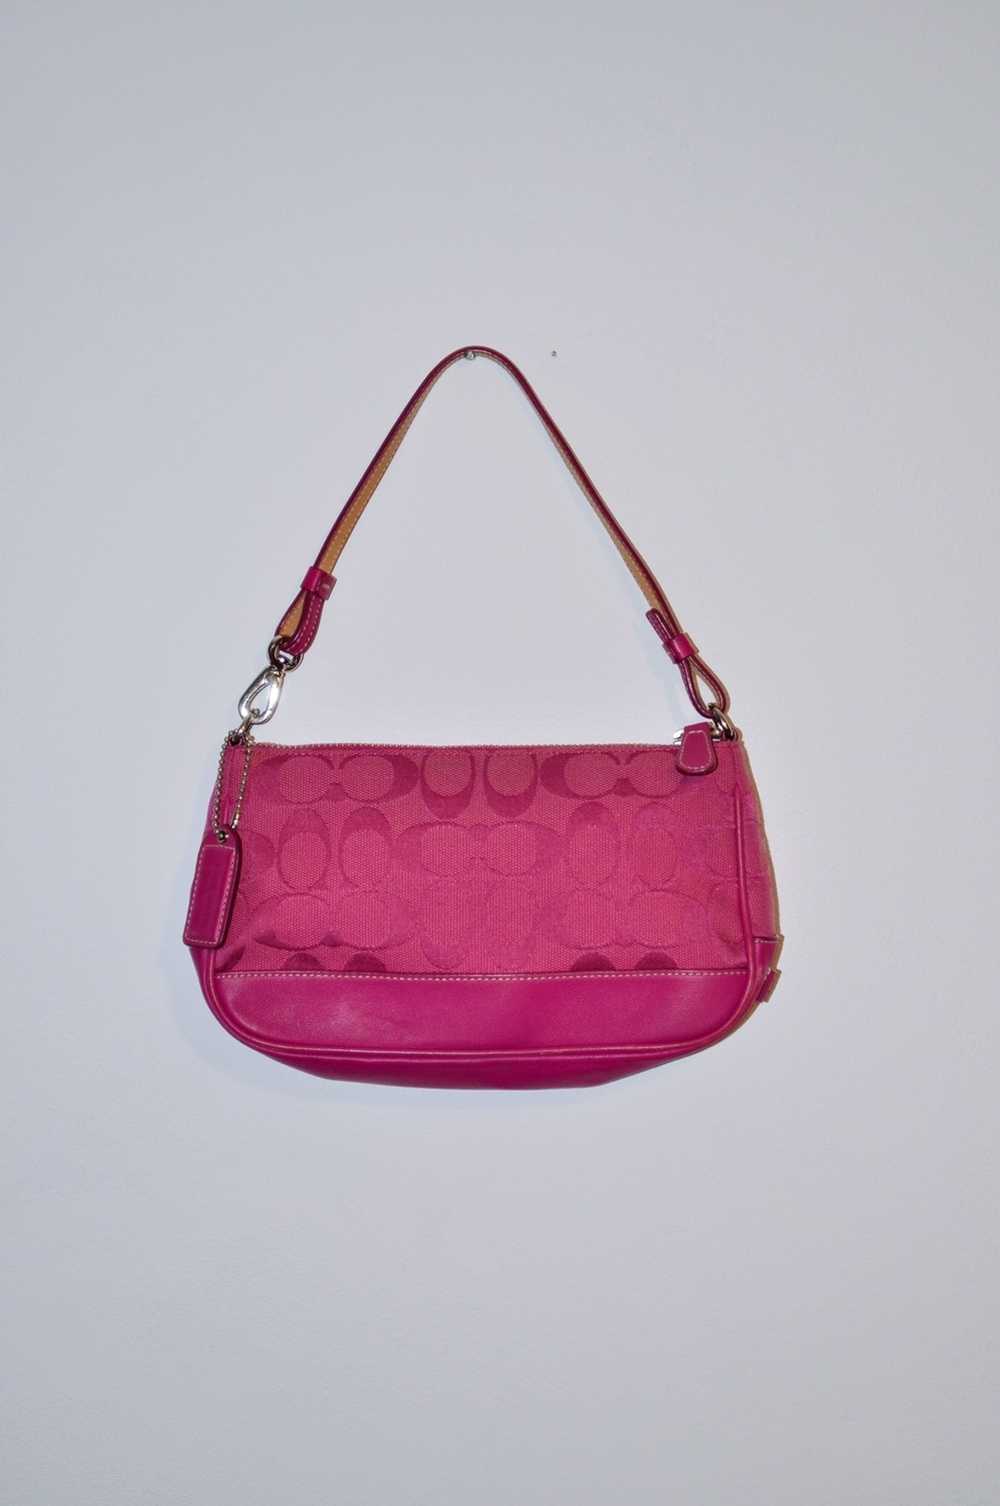 Coach Heritage Purse Cream/Pink Leather Stripe Small Domed Handbag  L0869-13194 | eBay